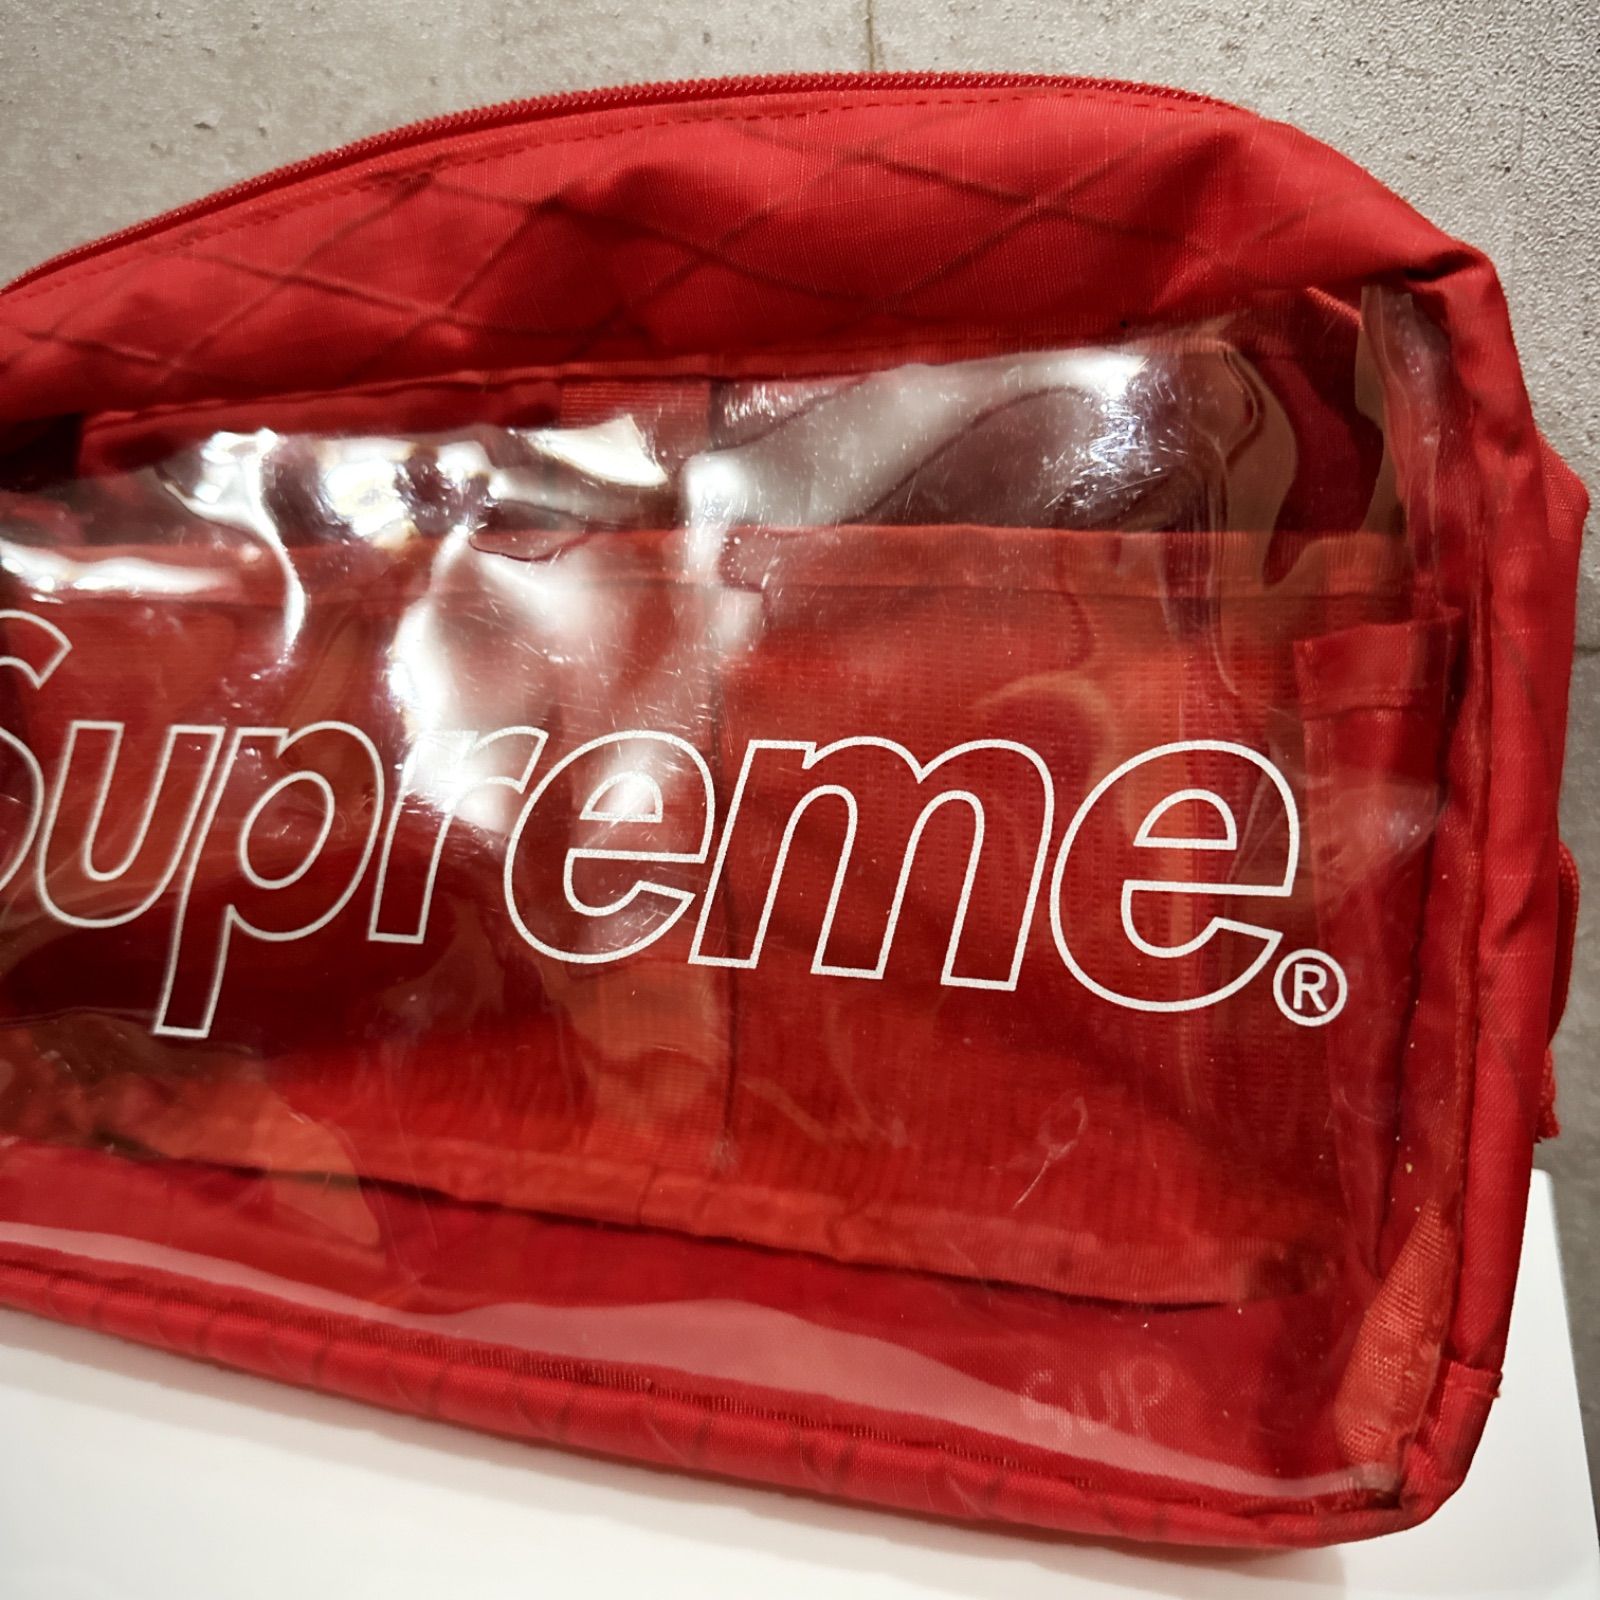 supreme 18aw utility bag 赤 redメンズ